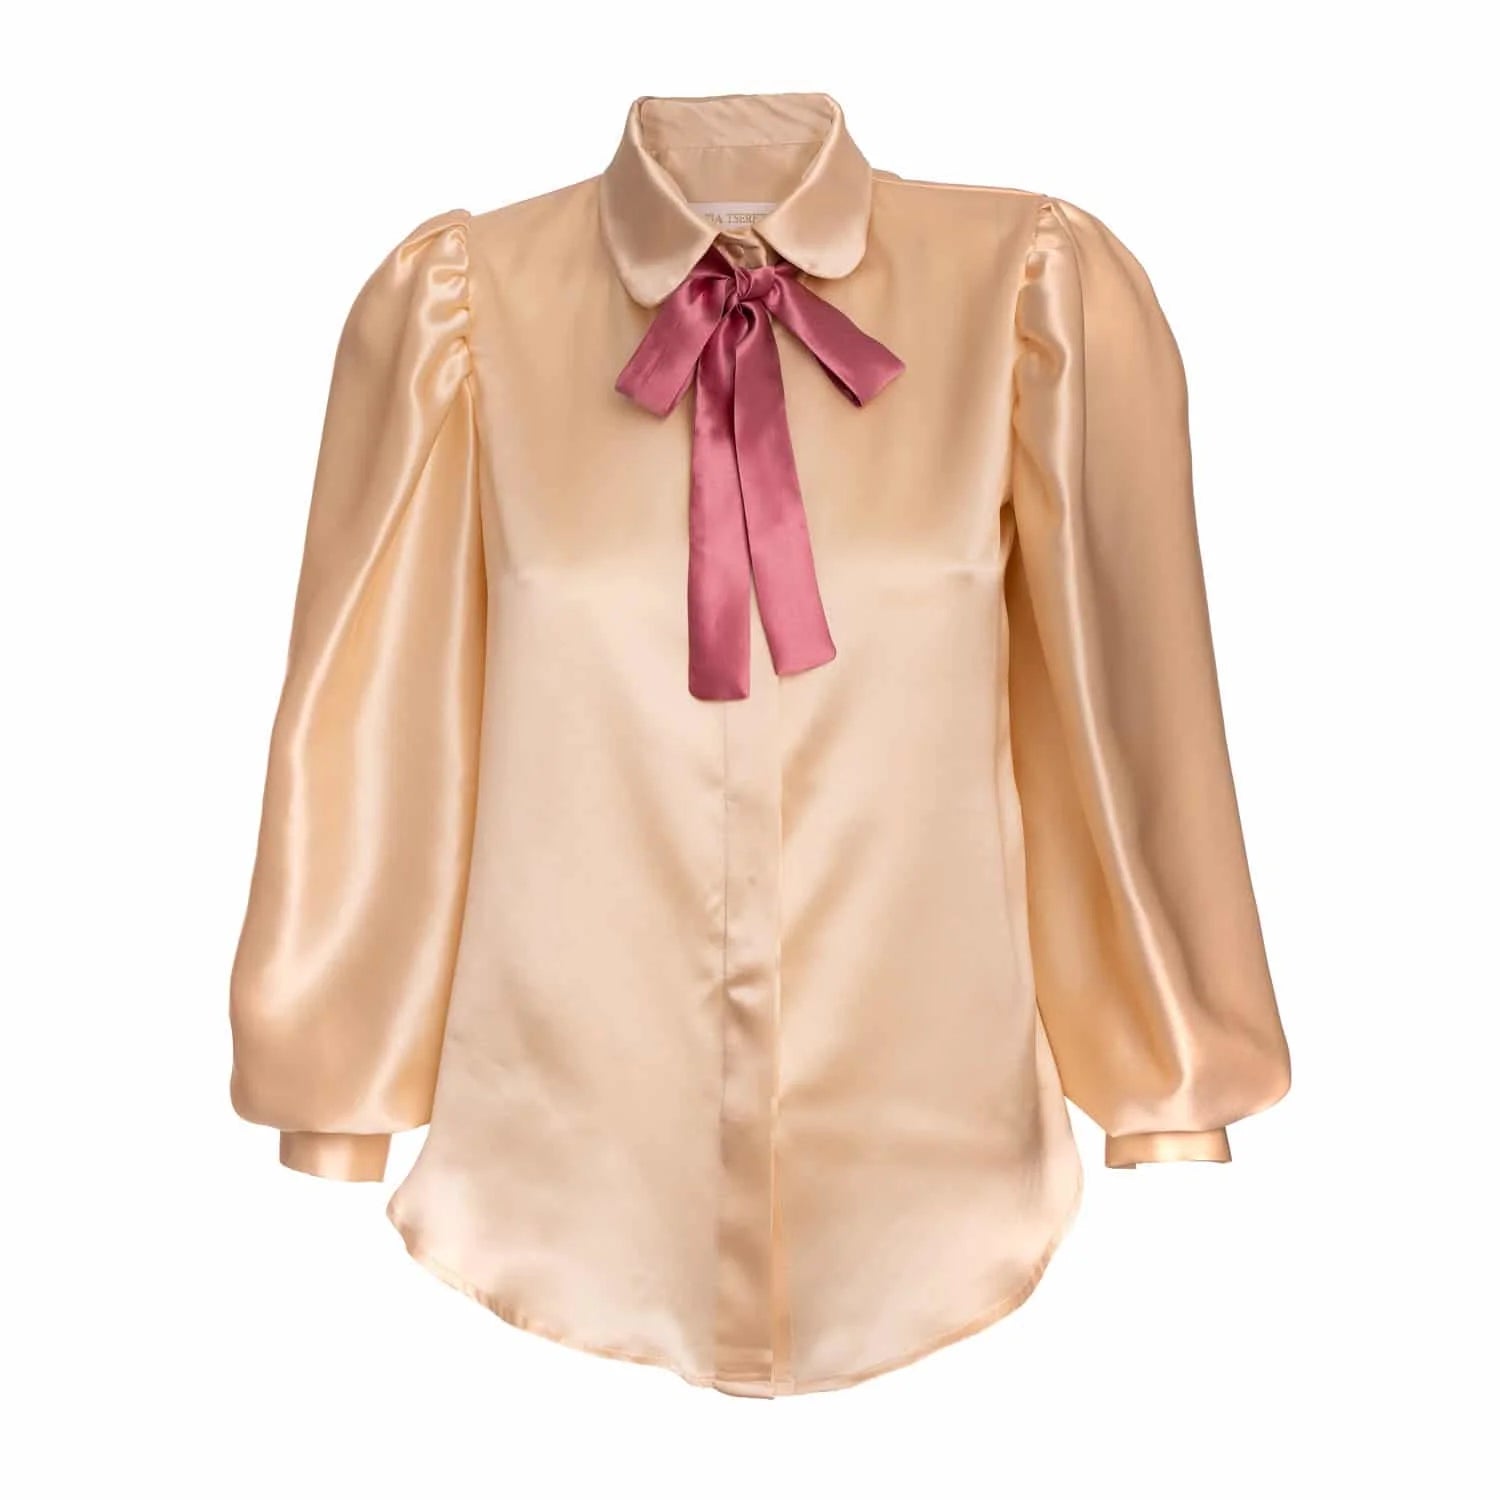 Ivory silk blouse - Blouse